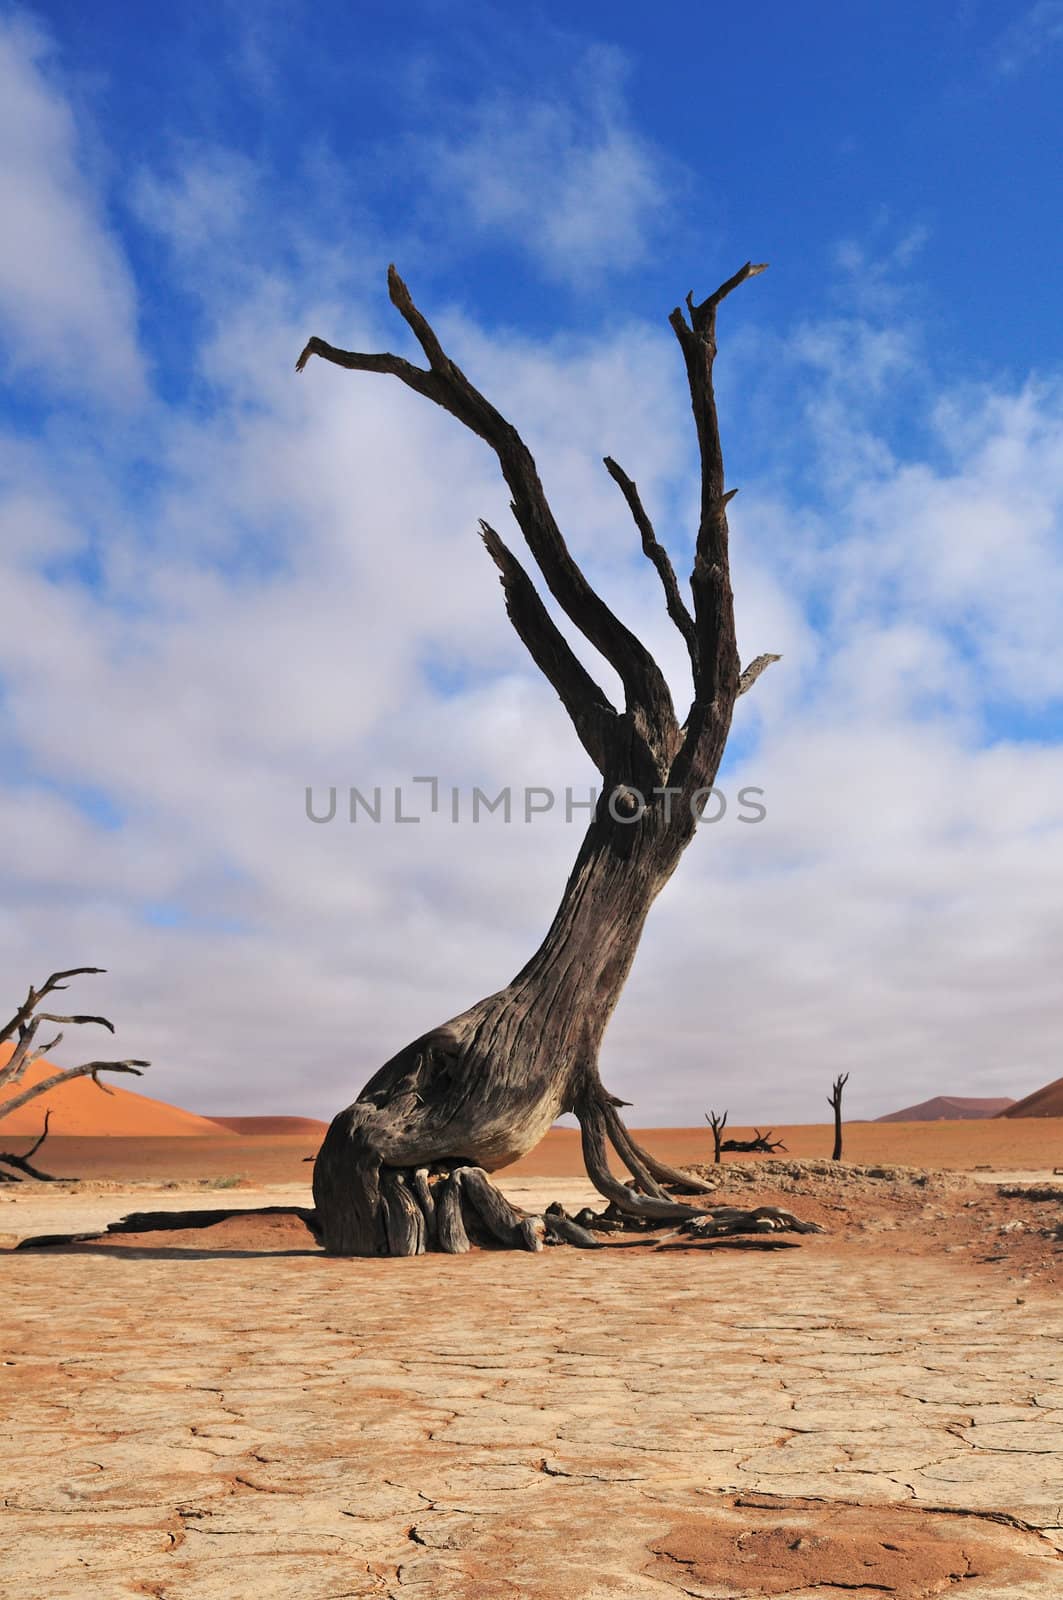 Lonely tree skeleton, Deadvlei, Namibia by dpreezg